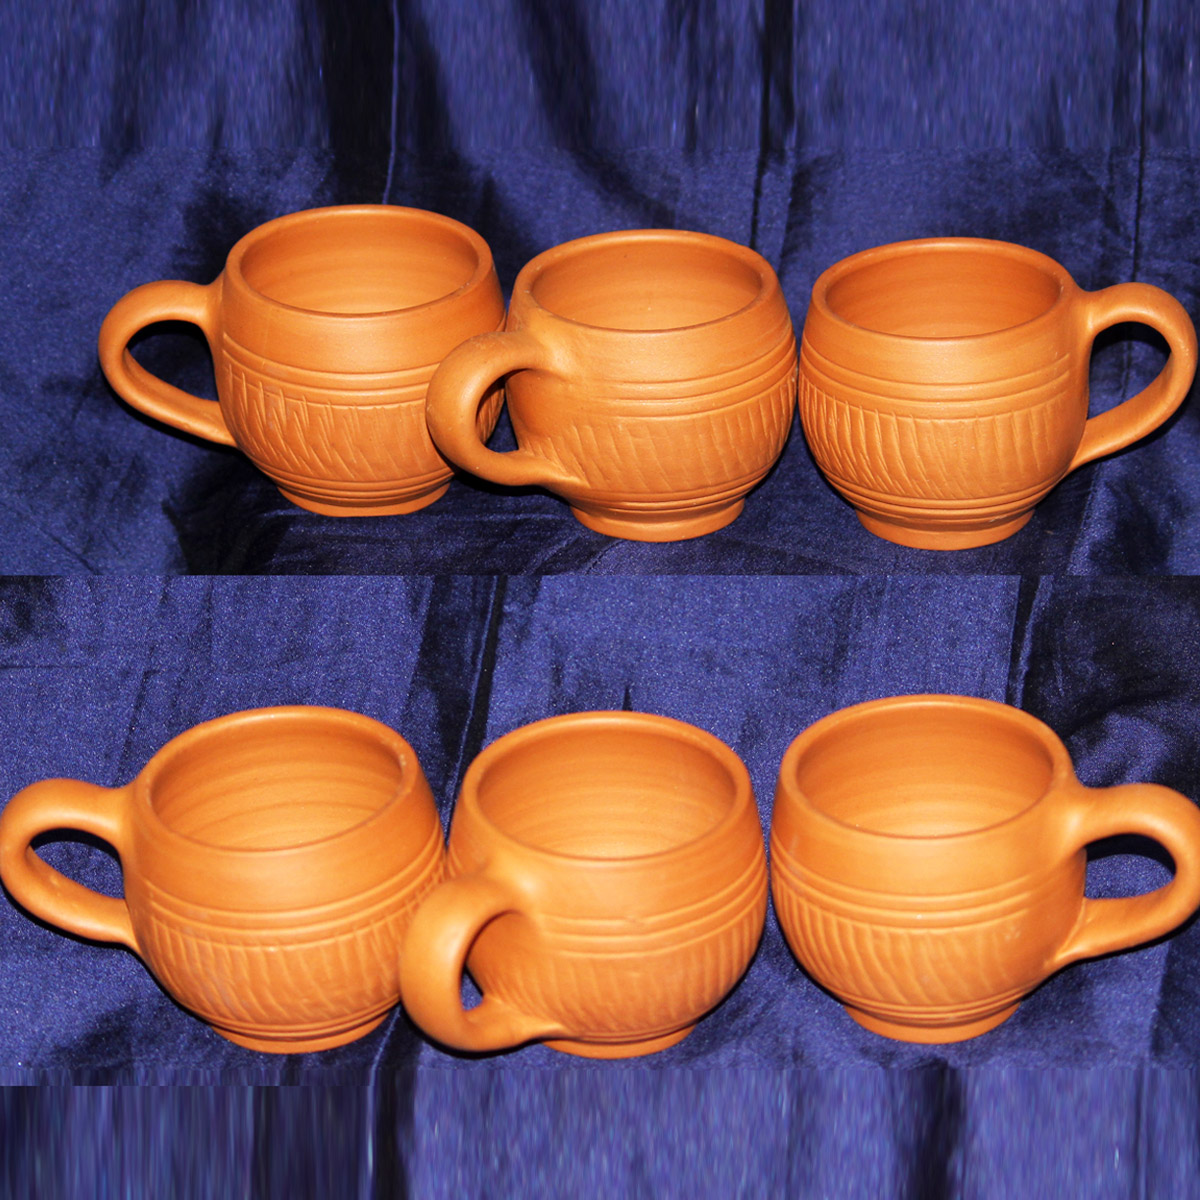 Pin on Tea, Tea Cups and Tea Pots